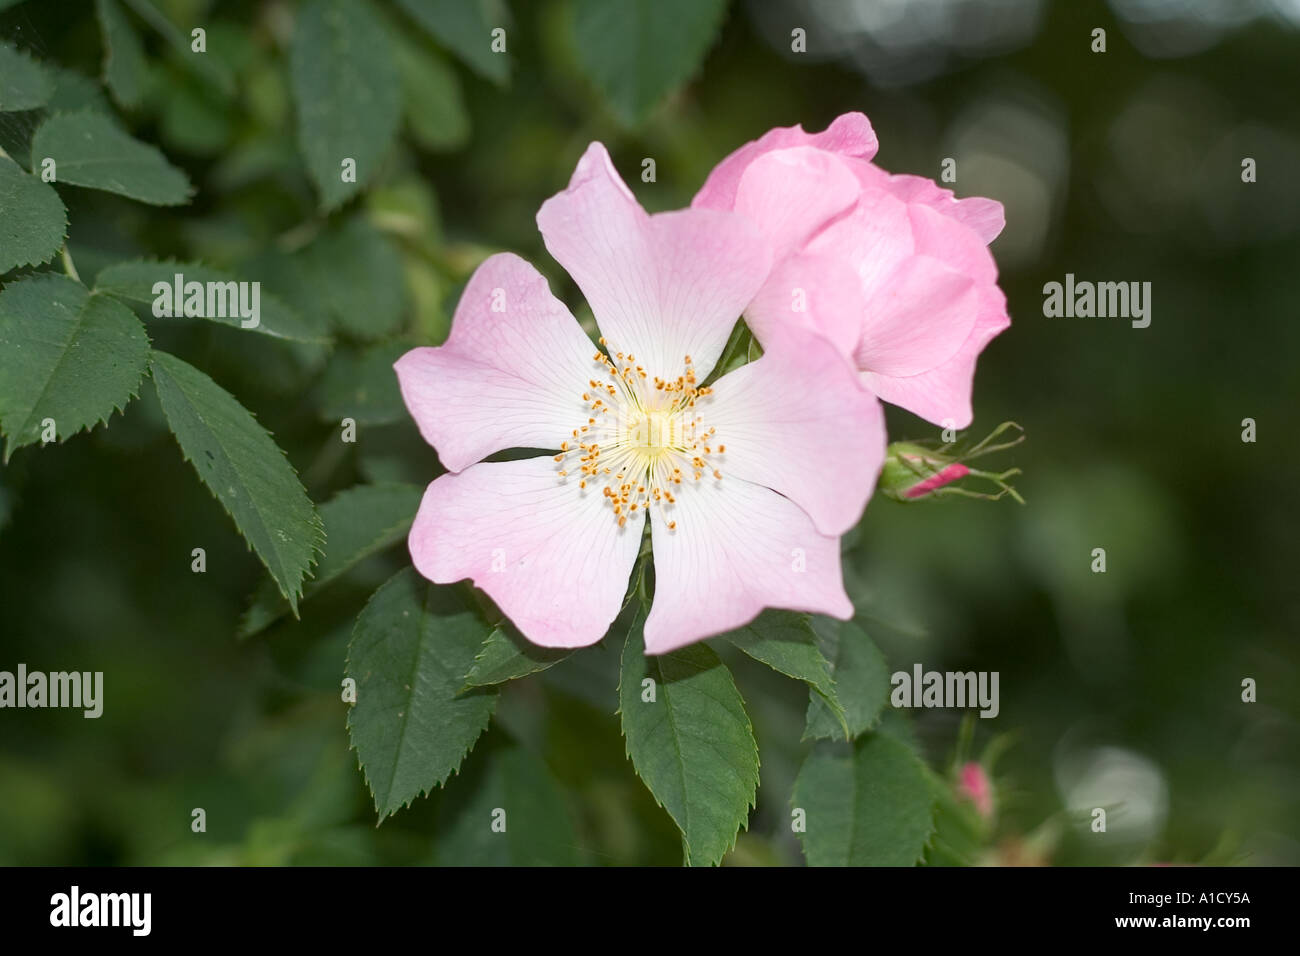 Dogrose bloom Stock Photo